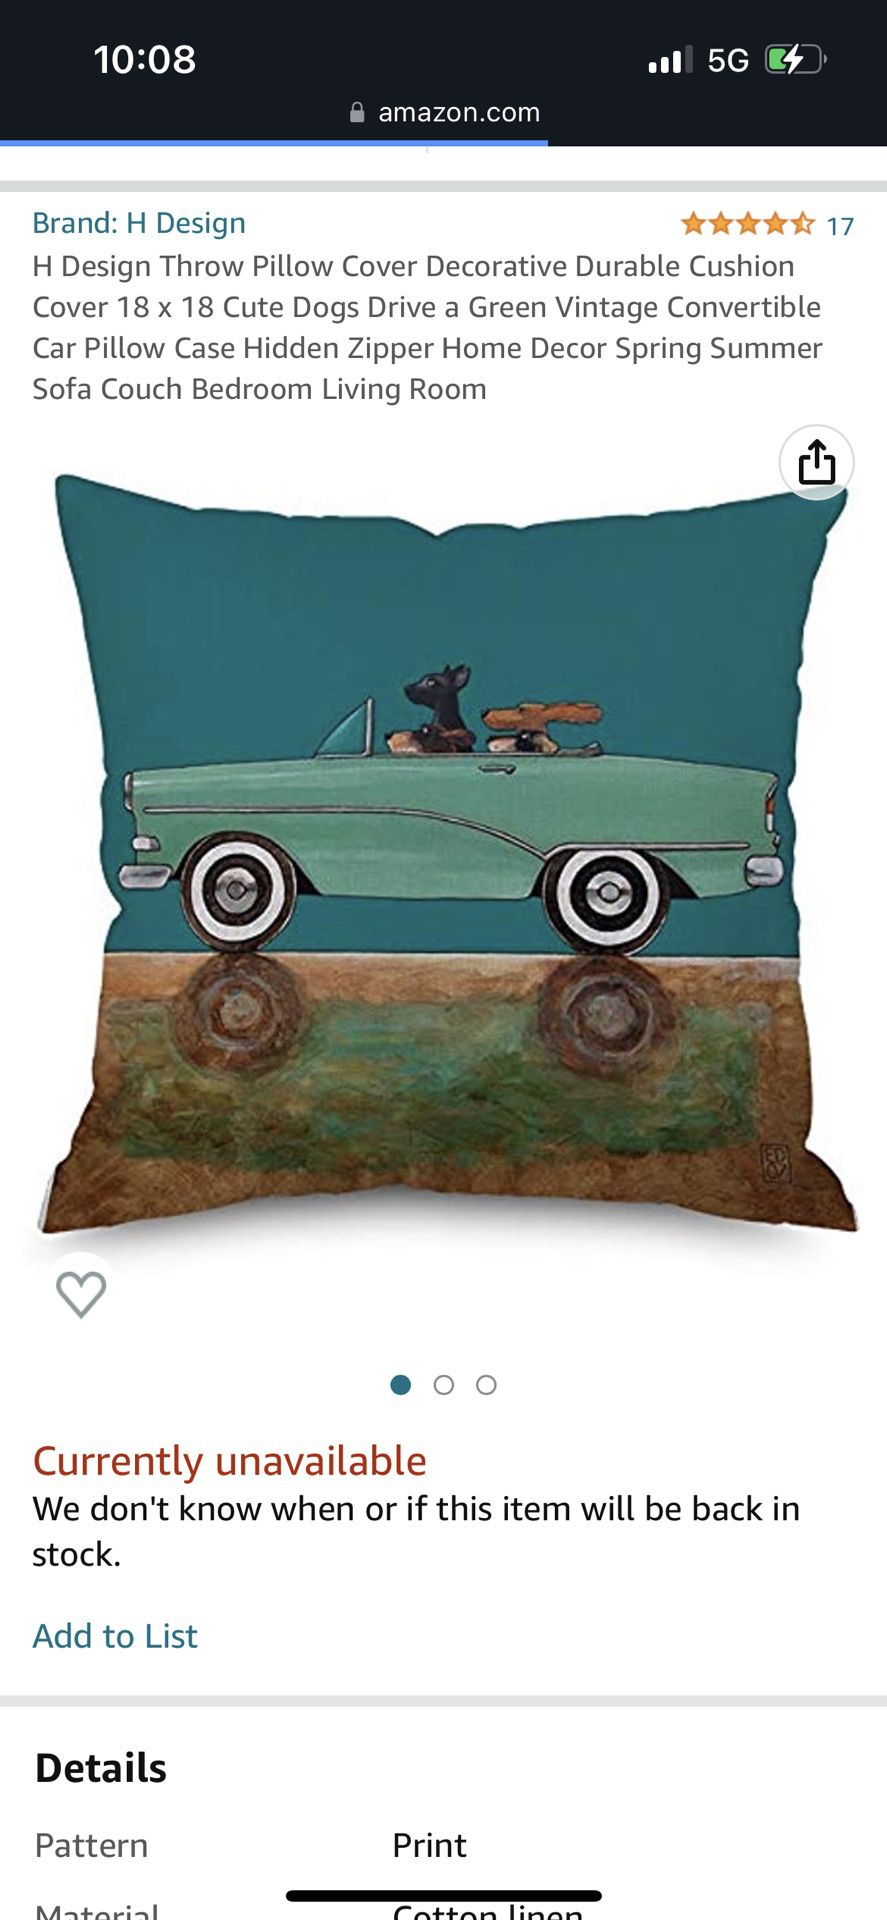 H Design Throw Pillow Cover Decorative Durable Cushion Cover 18 x 18 Cute Dogs Drive a Green Vintage Convertible Car Pillow Case Hidden Zipper Home De